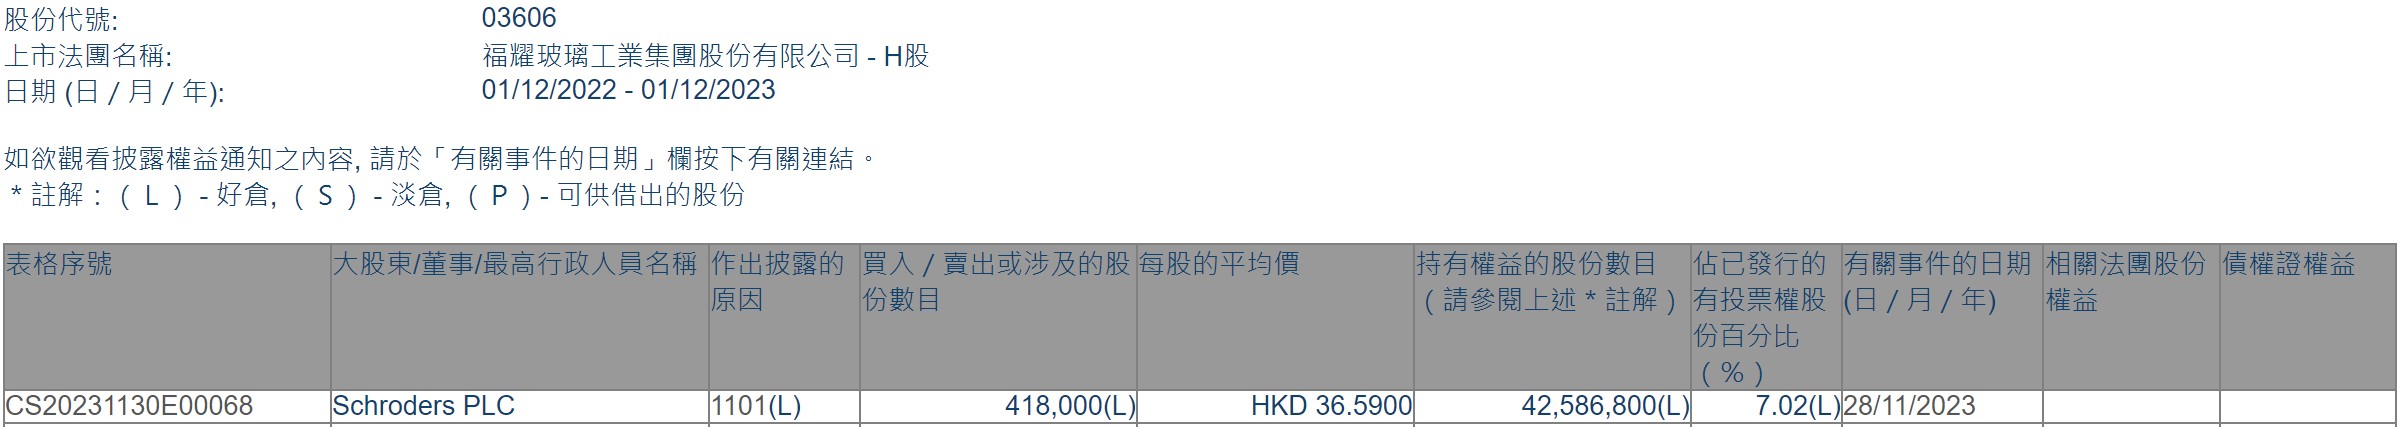 Schroders PLC增持福耀玻璃(03606)41.8万股 每股作价36.59港元